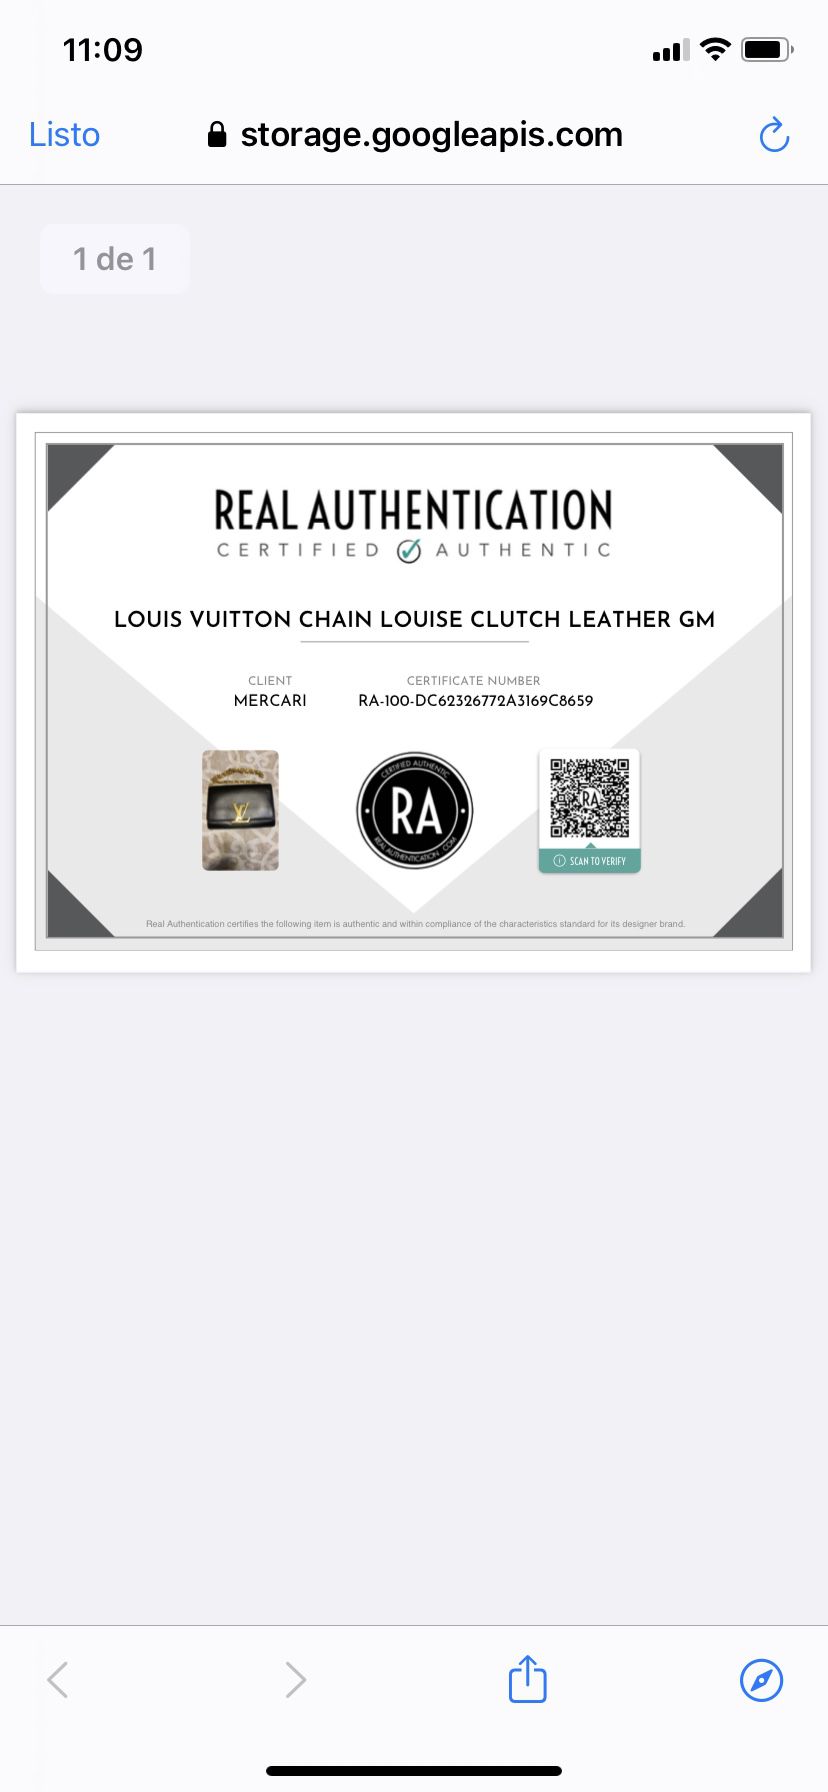 Louis Vuitton Kasai Clutch (Authentic) for Sale in Garden Grove, CA -  OfferUp